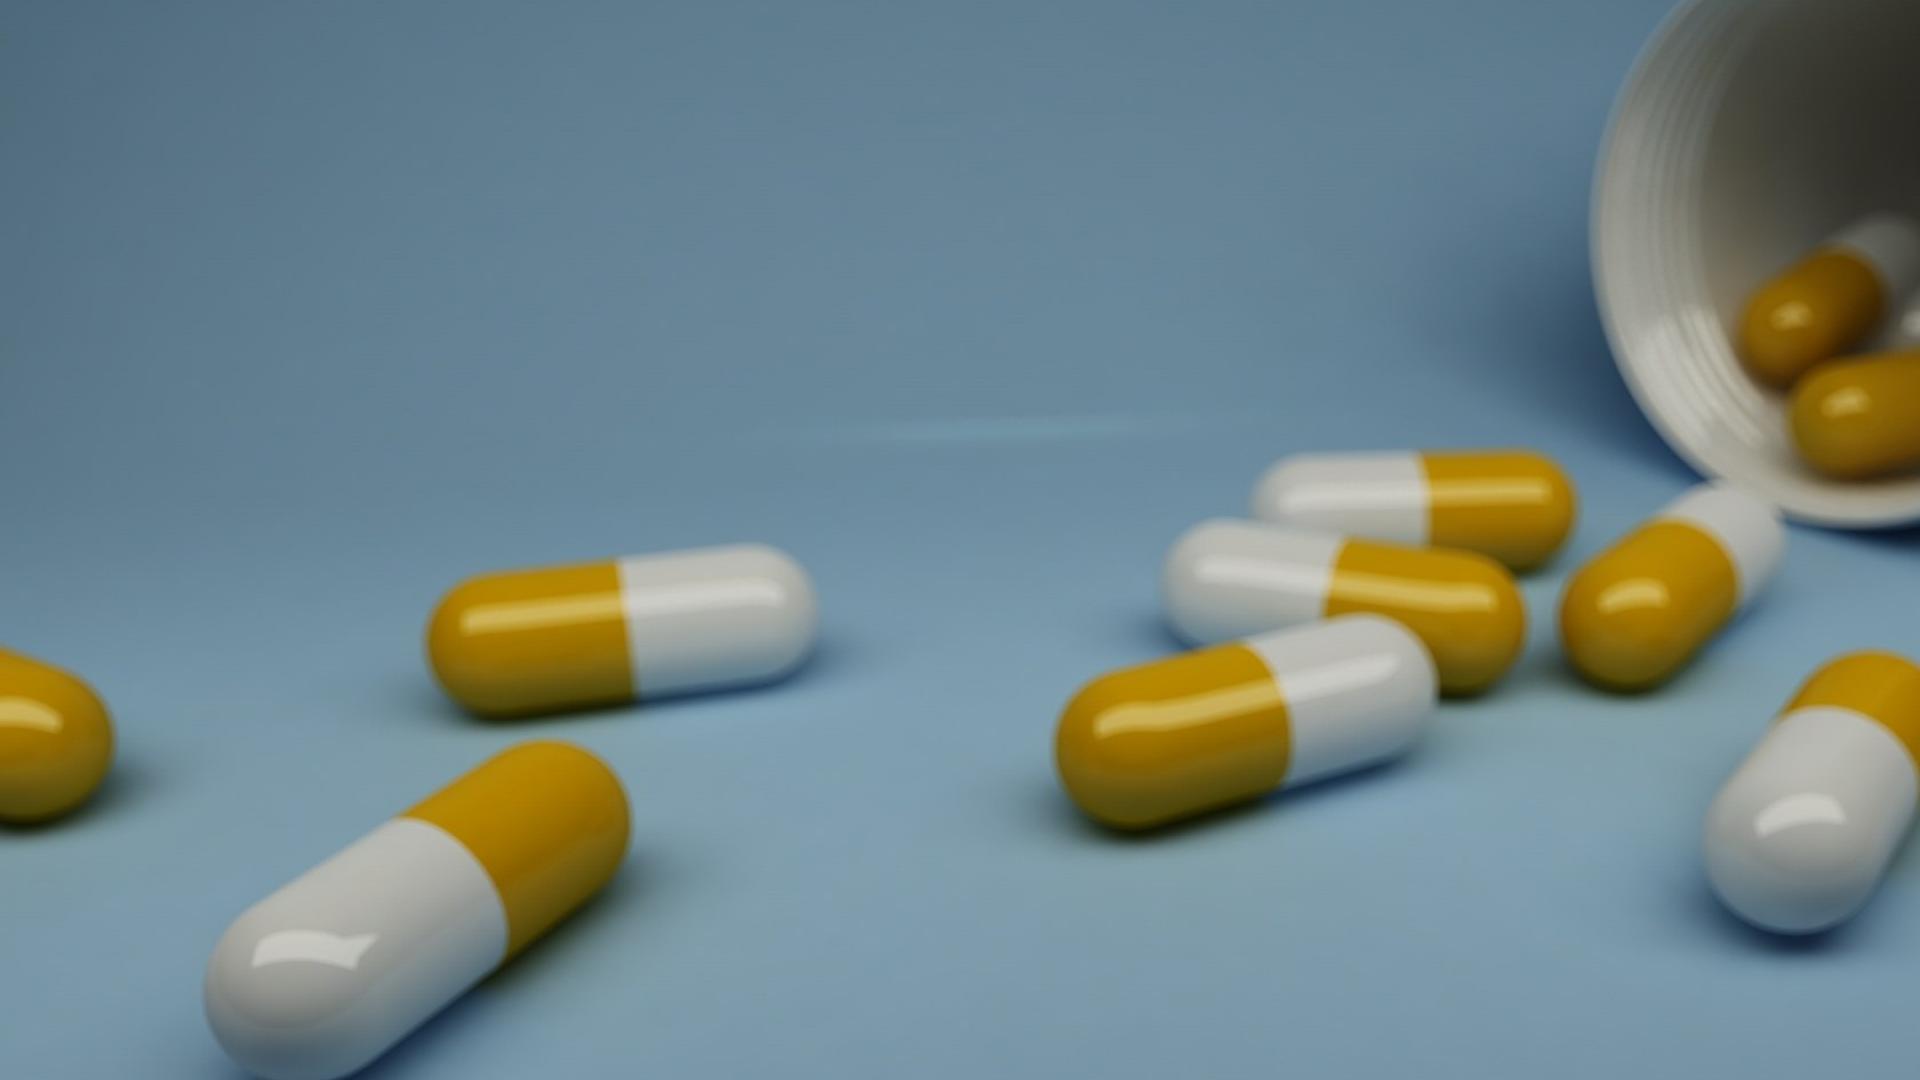 Pills and caduceus pharmacy symbol Pills and caduceus pharmacy symbol on  white isolated background 3d  CanStock